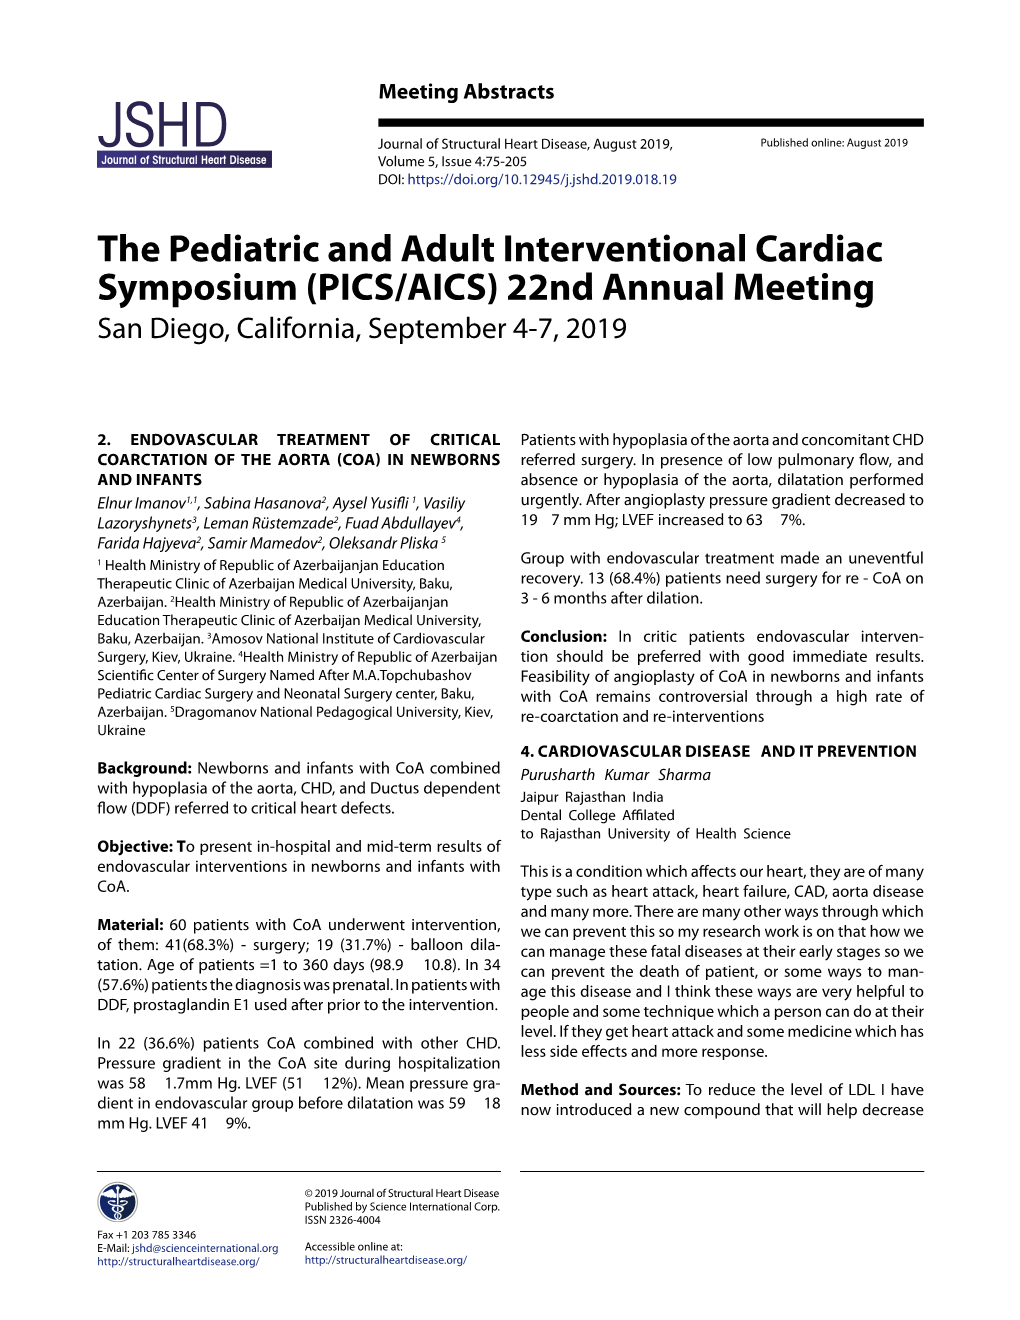 The Pediatric and Adult Interventional Cardiac Symposium (PICS/AICS) 22Nd Annual Meeting San Diego, California, September 4-7, 2019